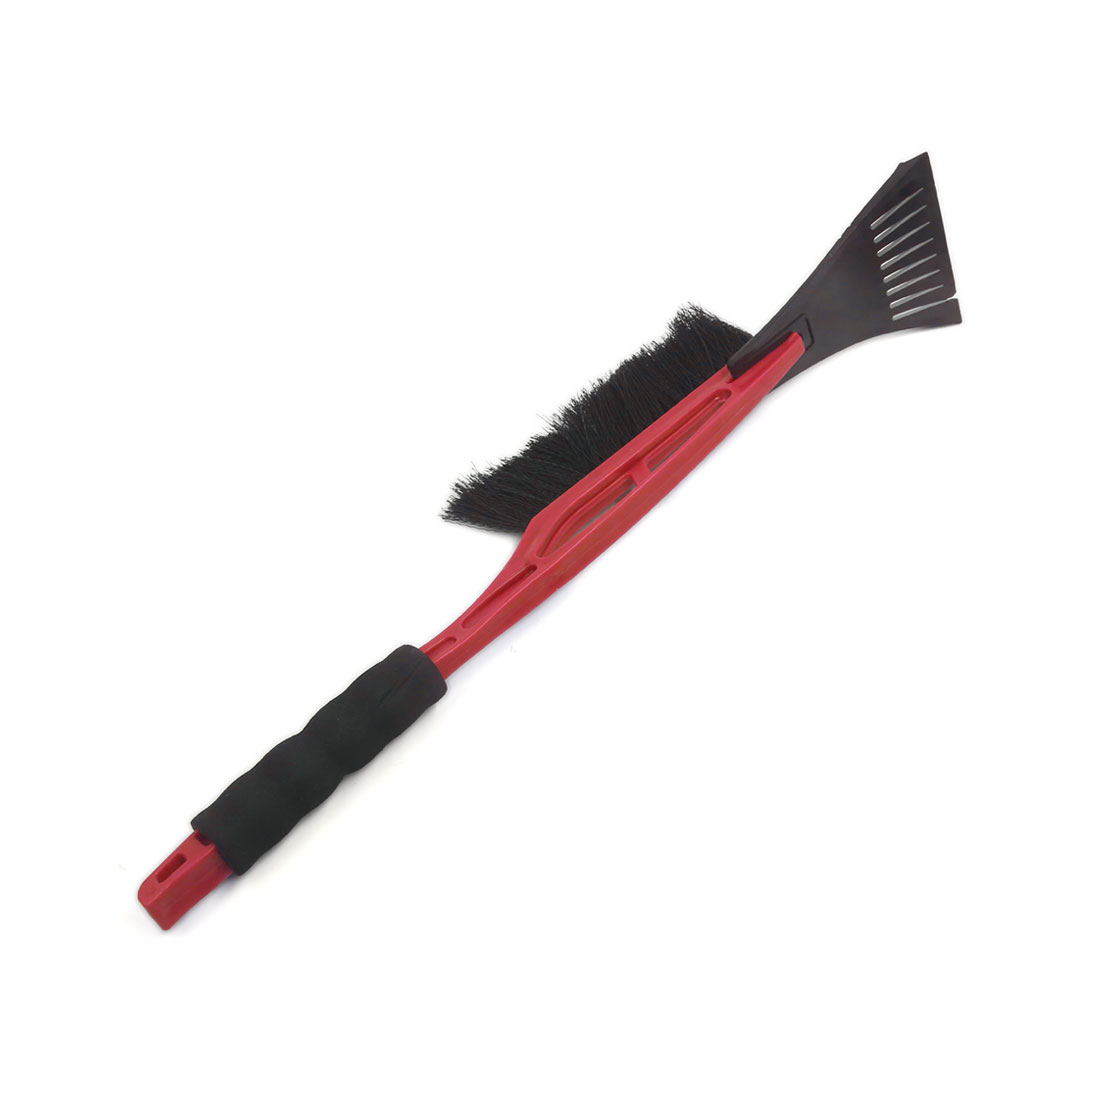 Unique Bargains 20" Car Vehicle Snow Brush Ice Scraper Snowbrush Shovel Removal Tool Black Red